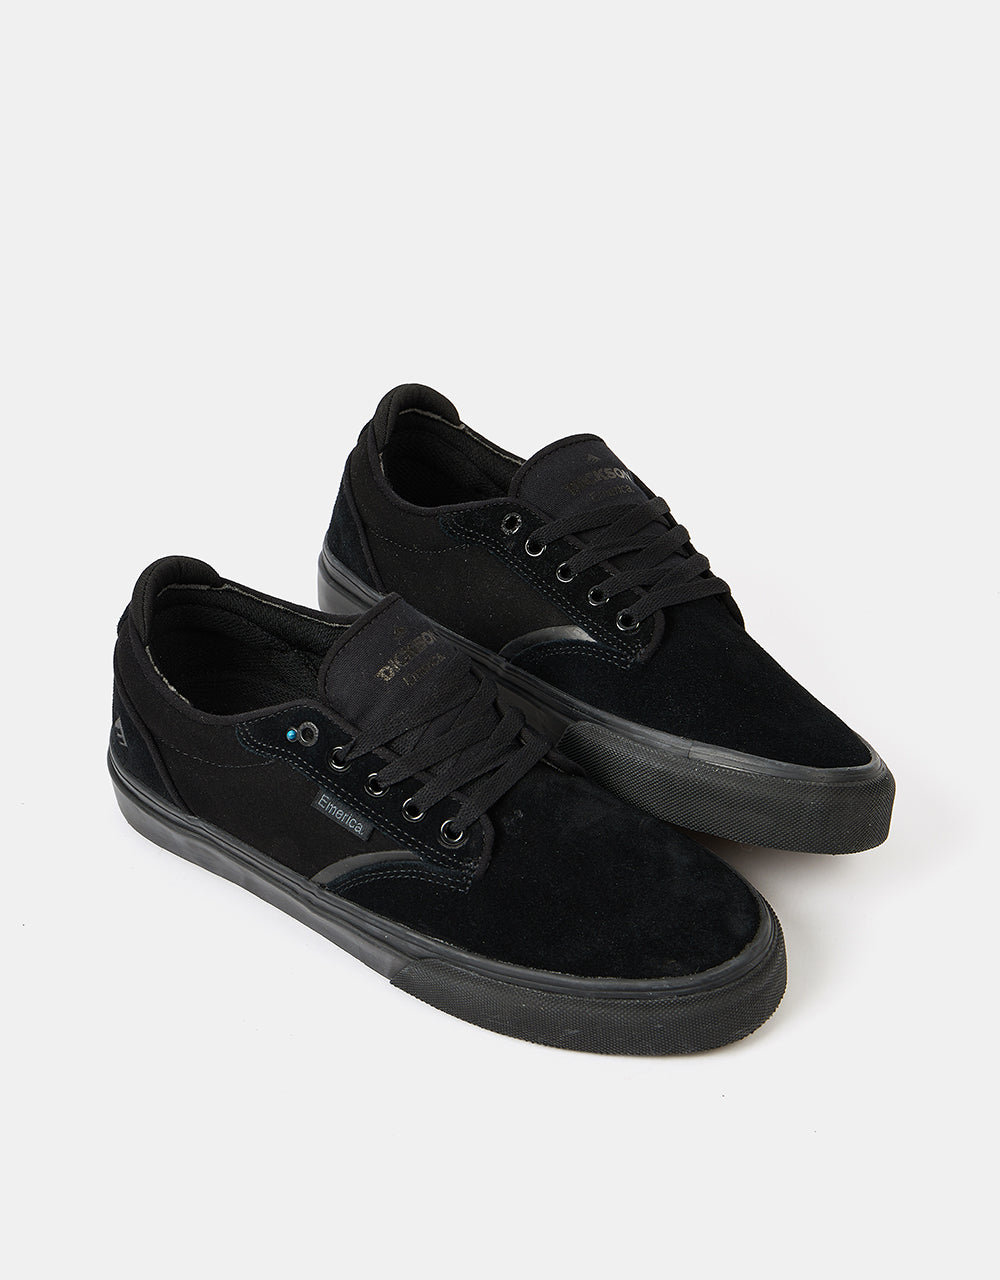 Emerica Dickson Skate Shoes - Black/Black